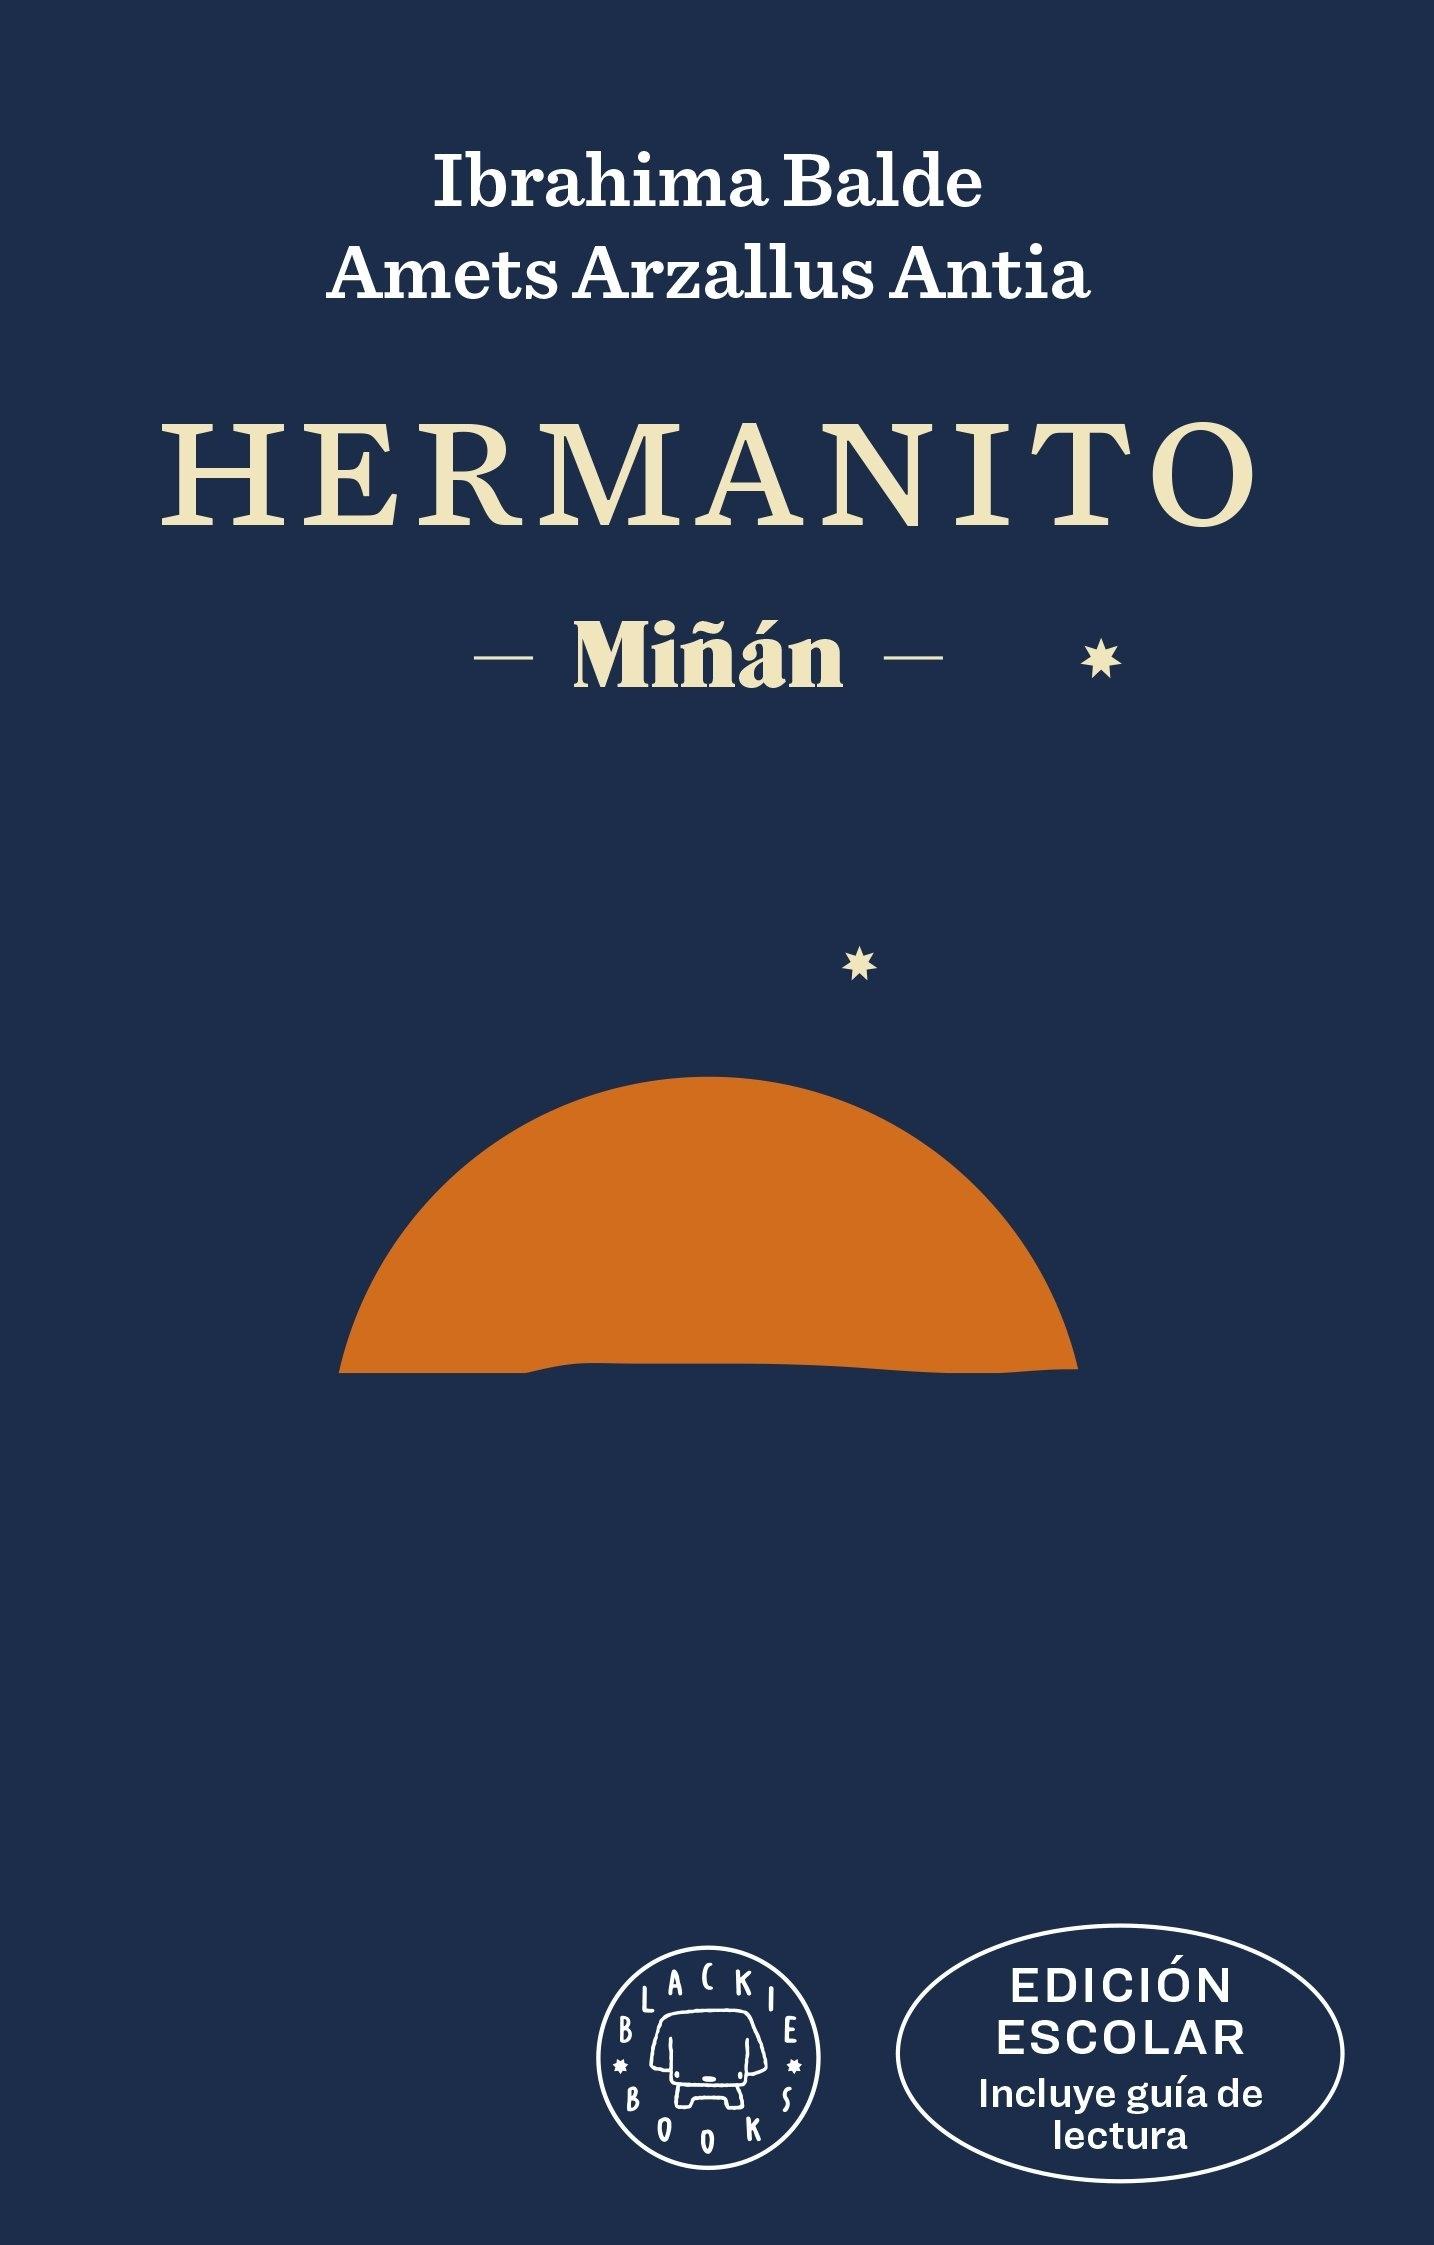 Hermanito (Ed. Escolar) "Miñán". 